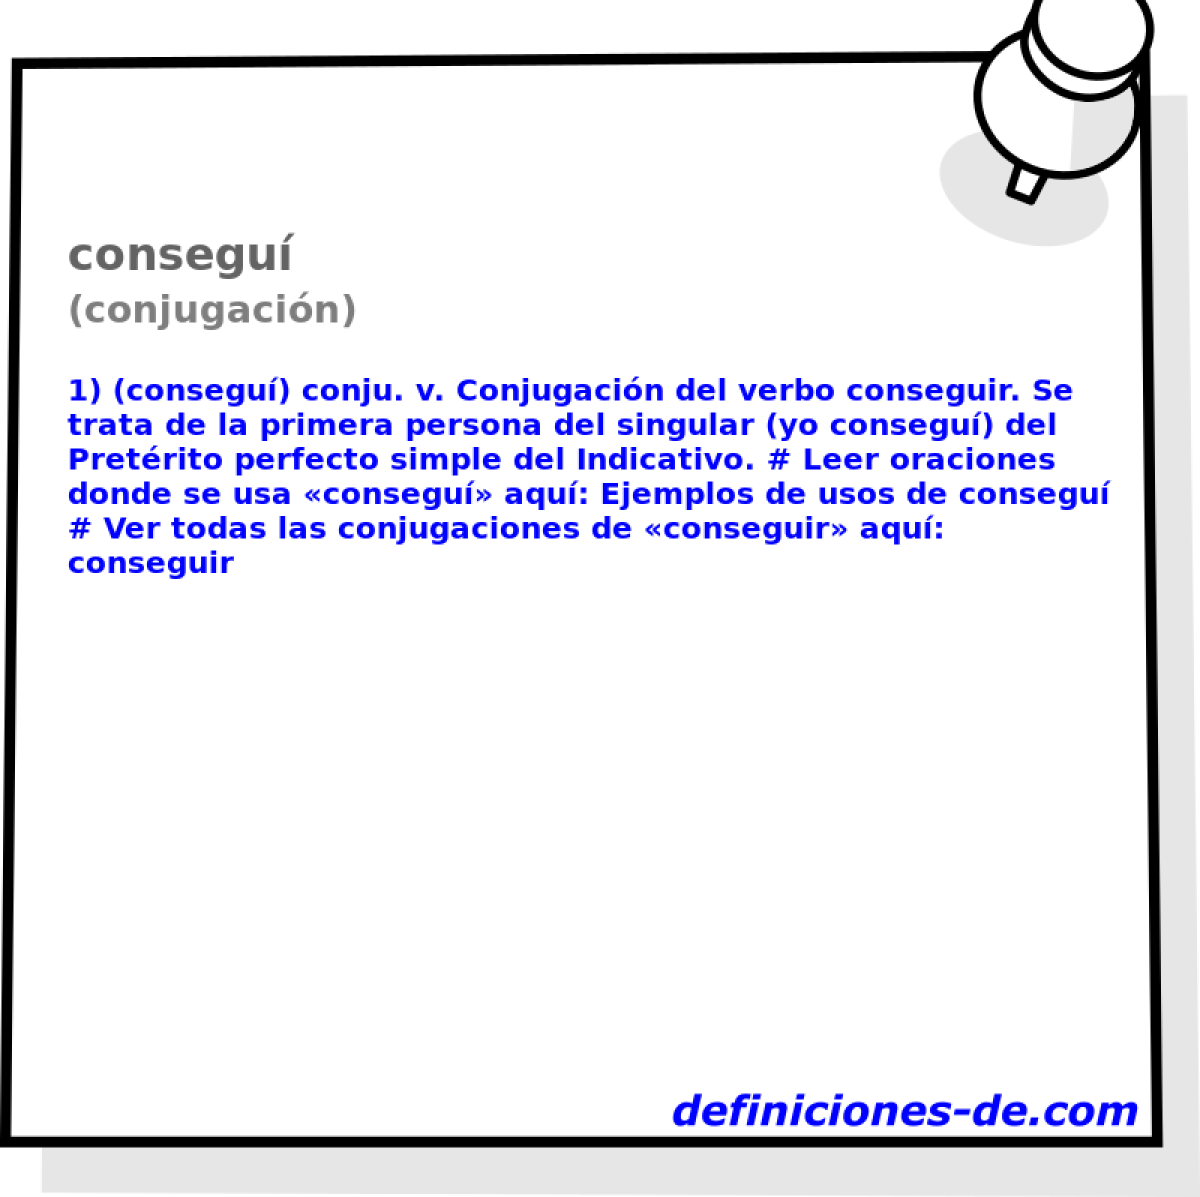 consegu (conjugacin)